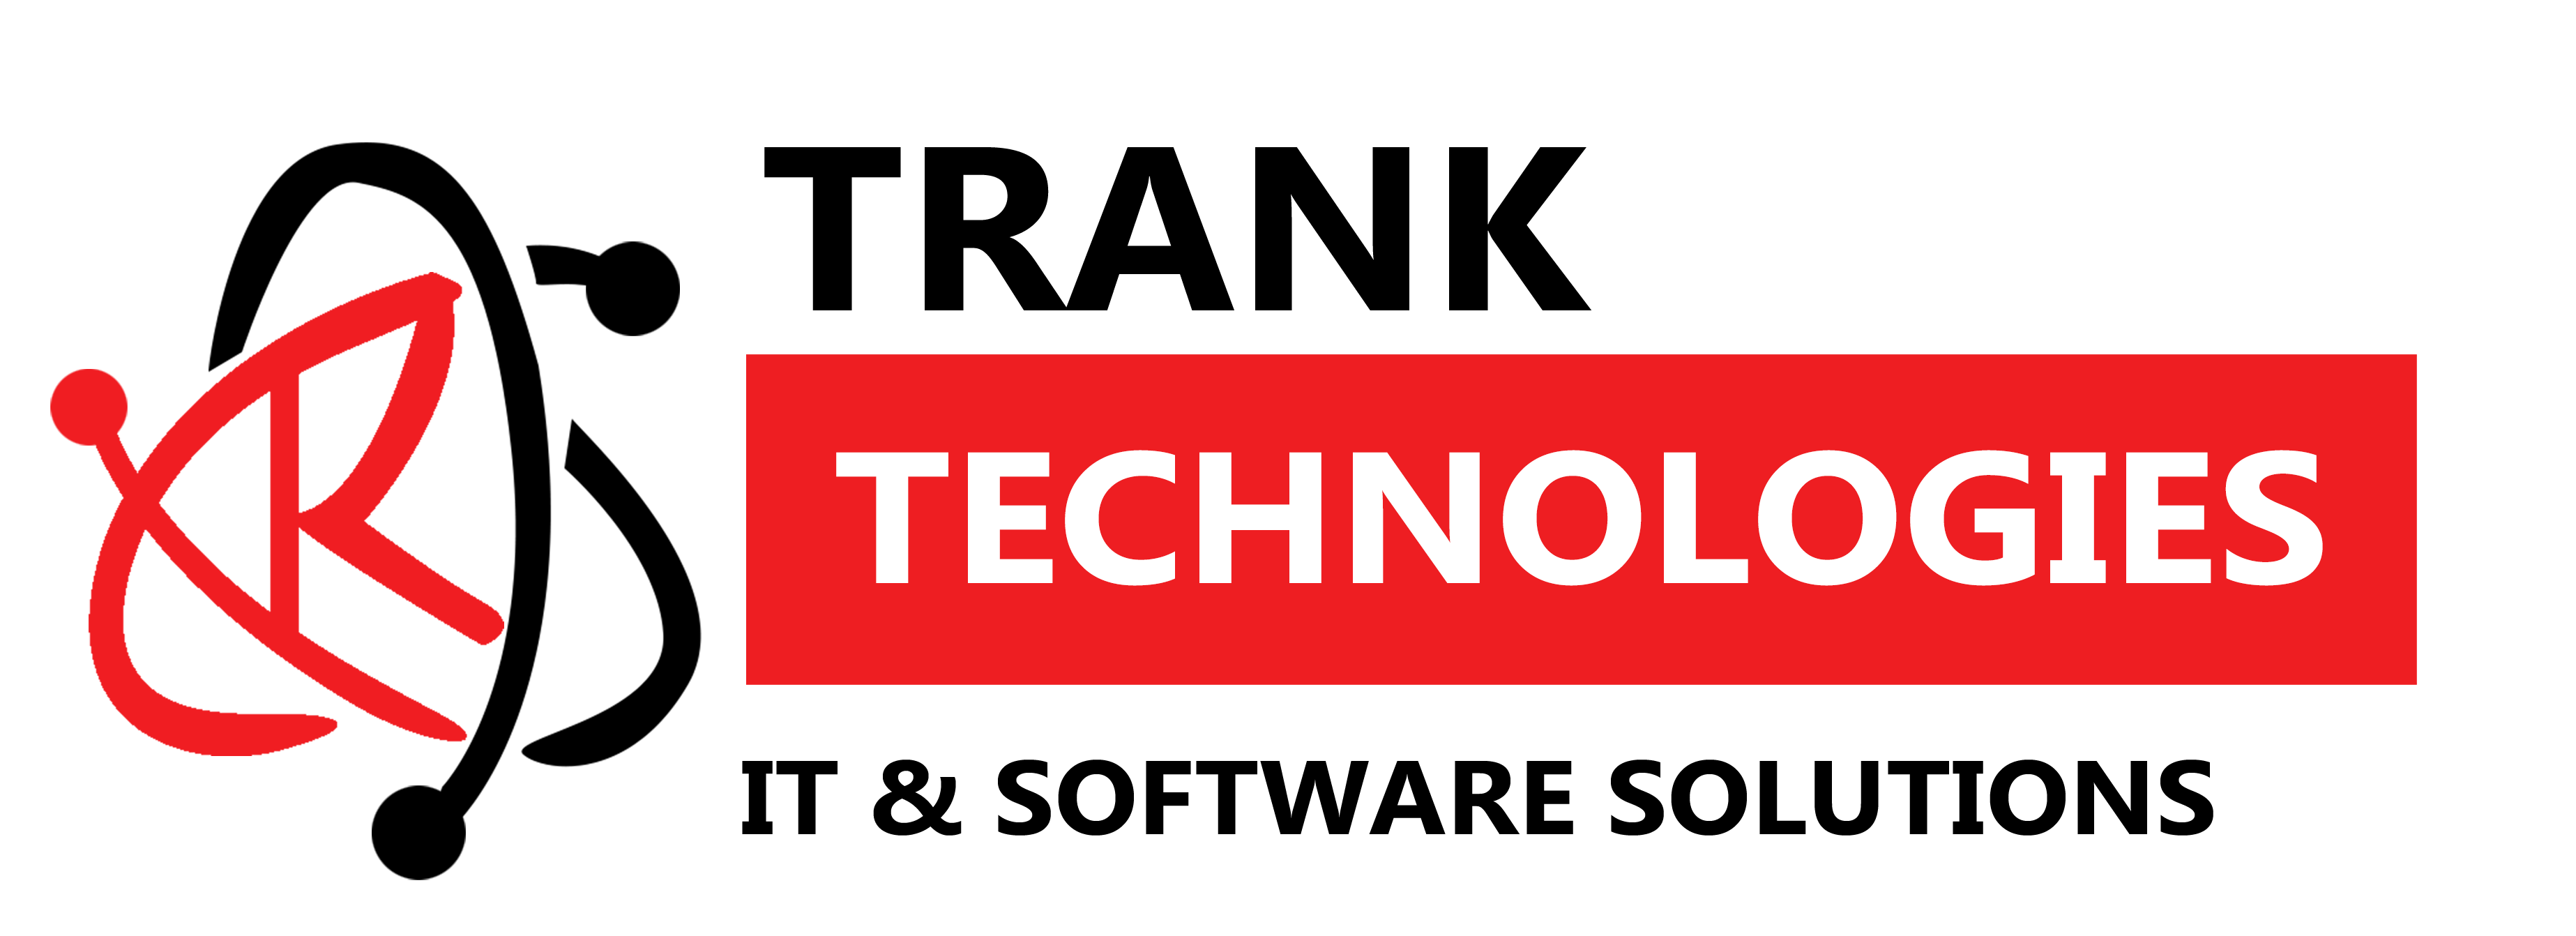 Trank Technologies Pvt Ltd logo